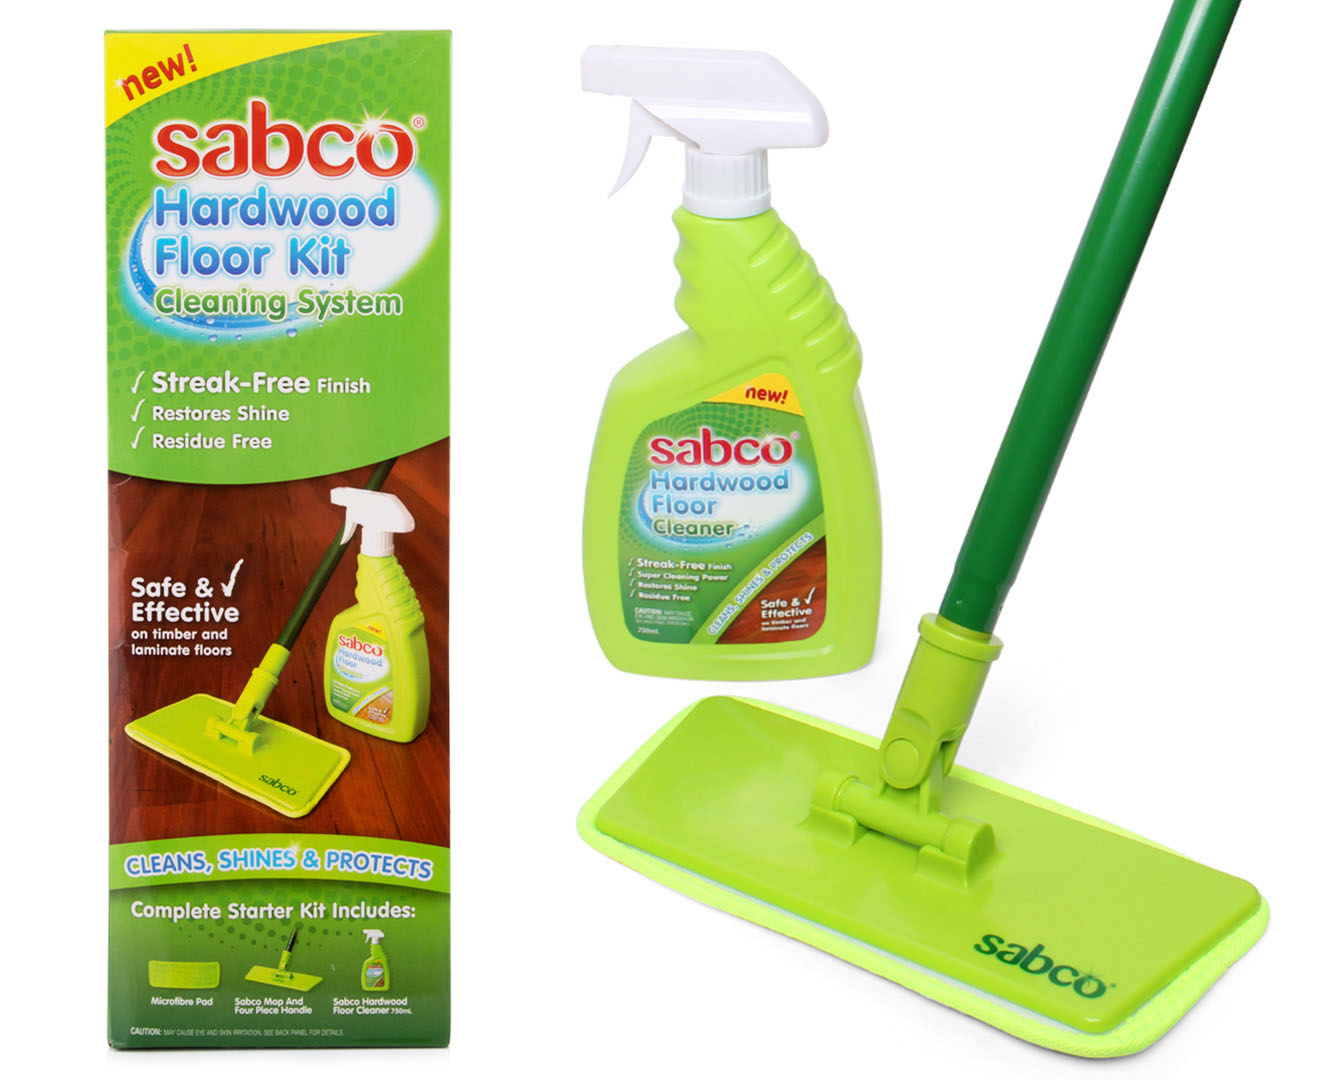 Sabco Hardwood Floor Kit Cleaning System Catch Com Au